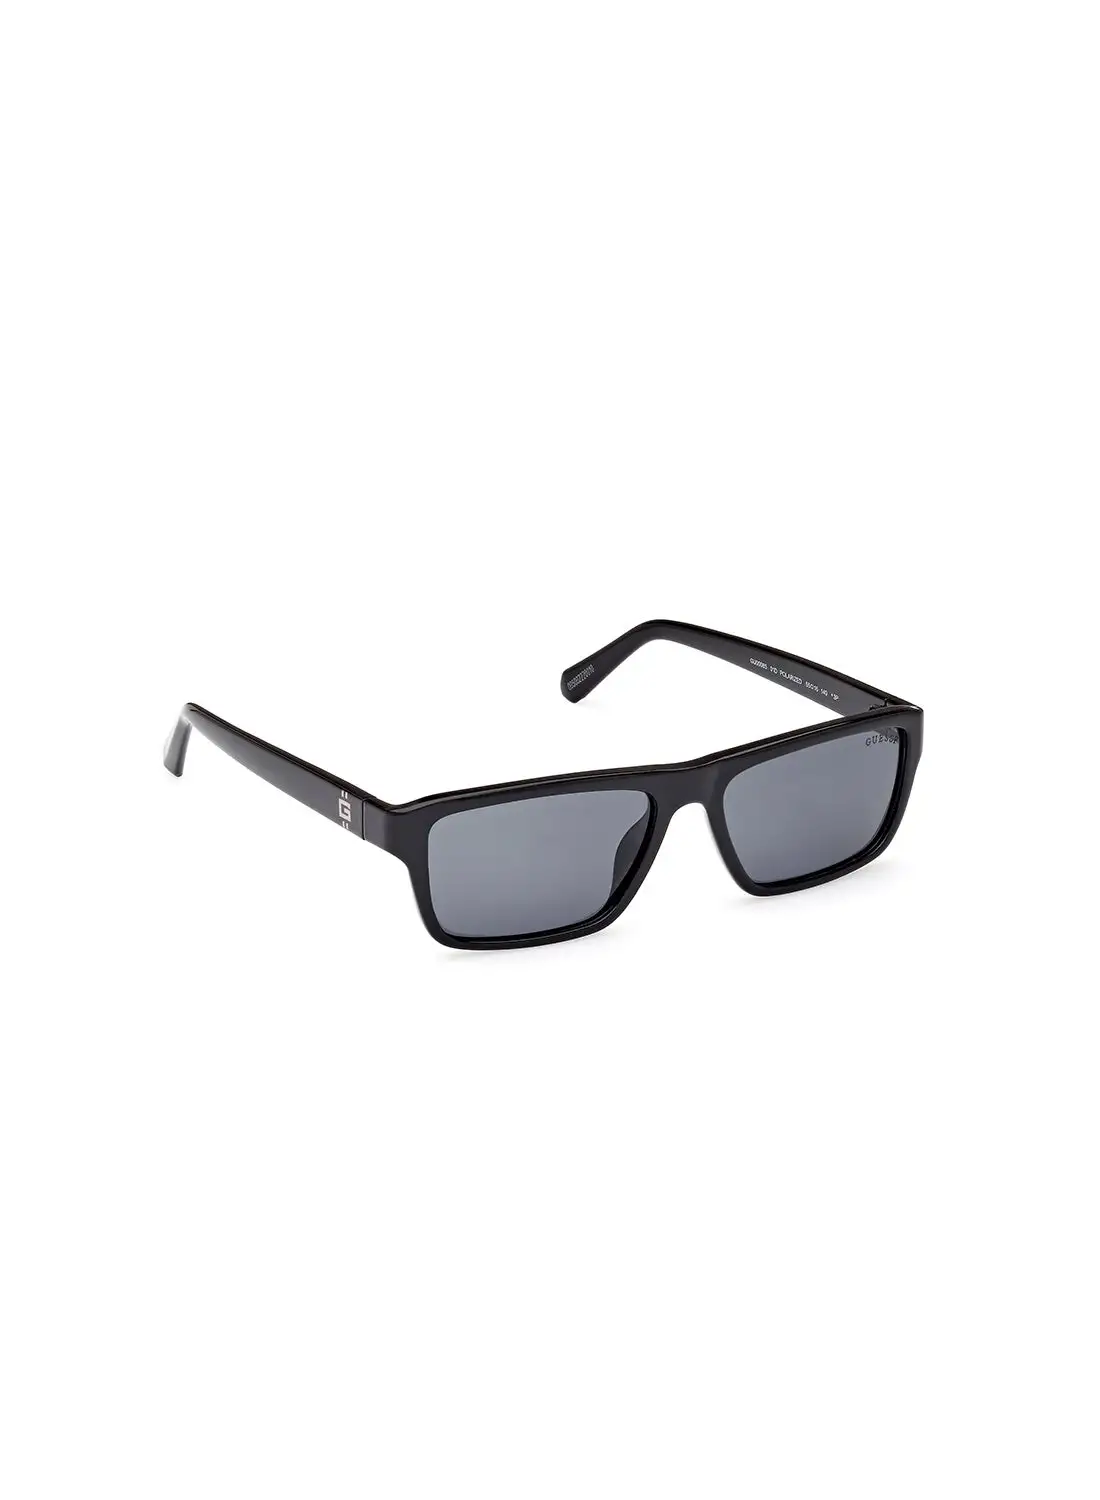 GUESS Men's Polarized Rectangular Sunglasses - GU0008501D55 - Lens Size: 55 Mm